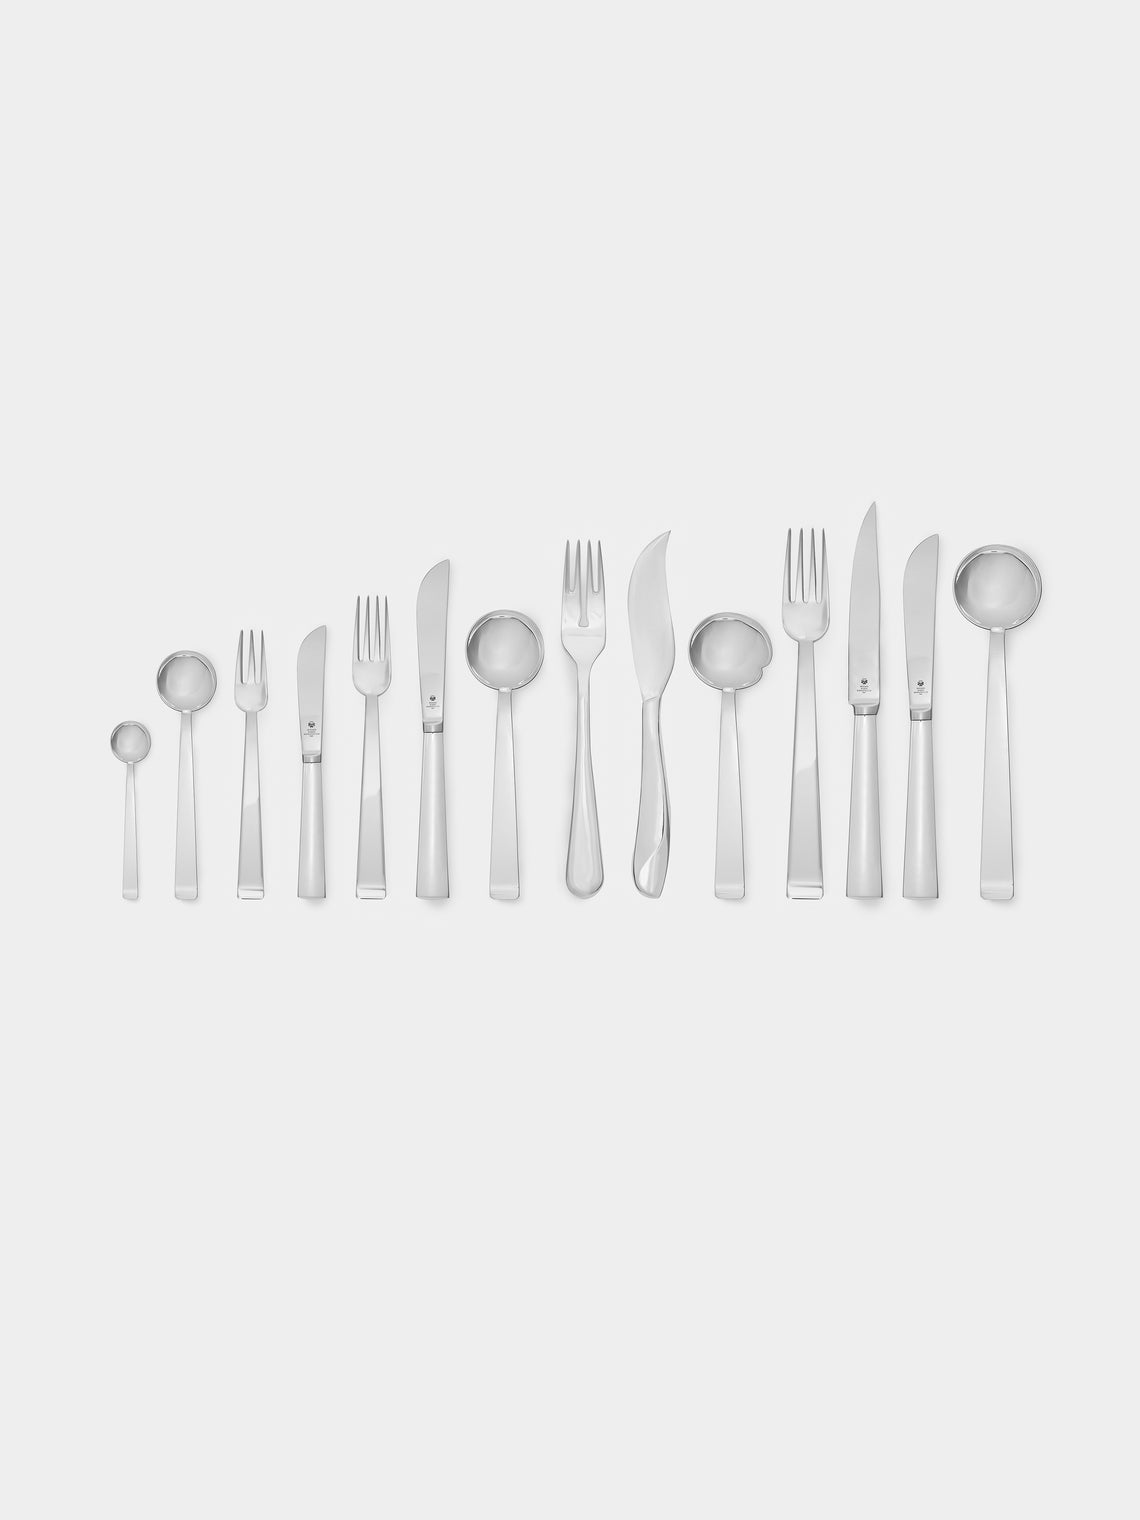 Wiener Silber Manufactur - Josef Hoffmann 135 Silver-Plated Dinner Knife -  - ABASK